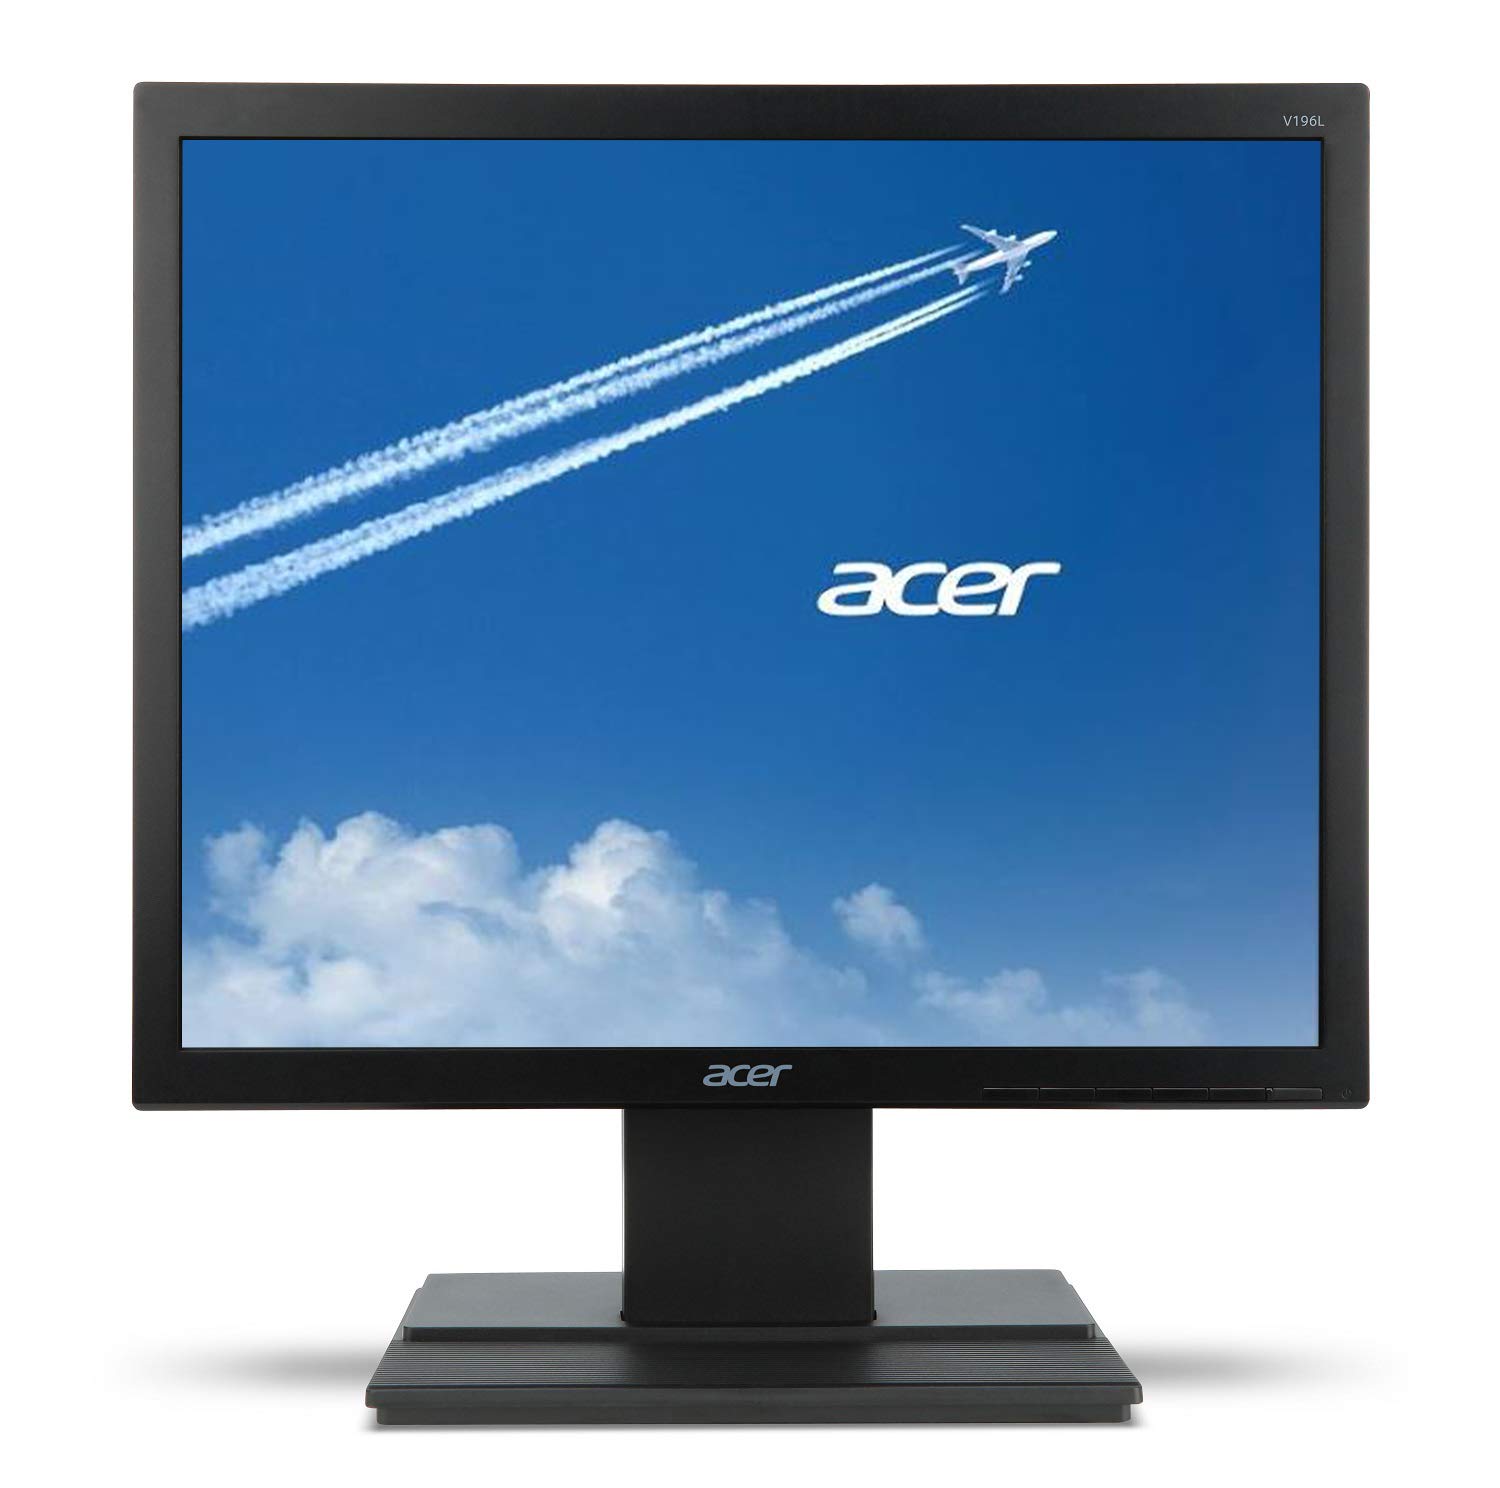 Acer Moniteur IPS V196L Bb 19' HD (1280 x 1024) (port VGA)